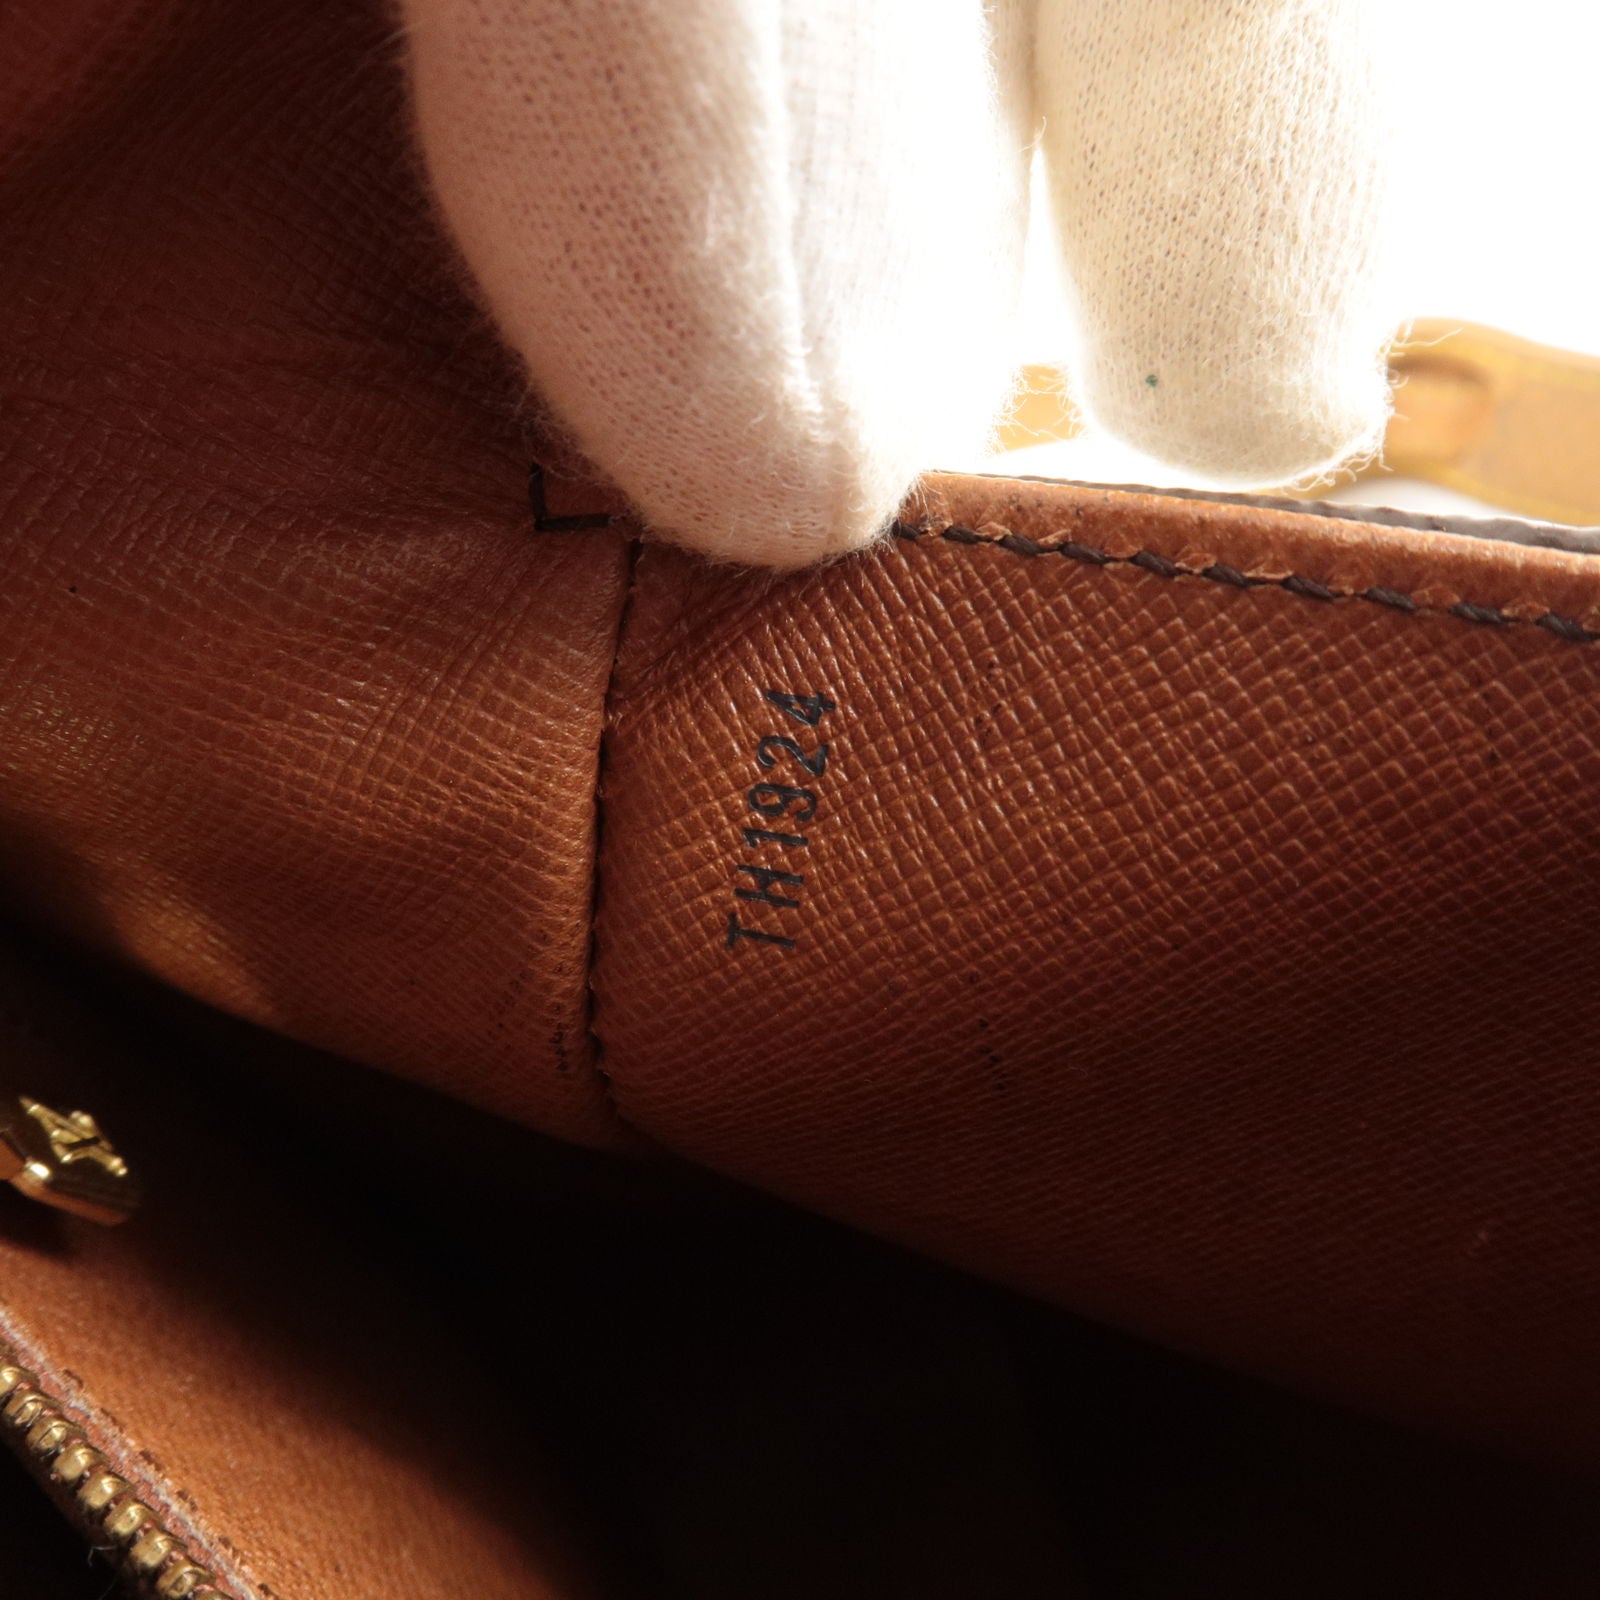 Louis Vuitton Felicie Strap & Go Bag - The Shoe Box